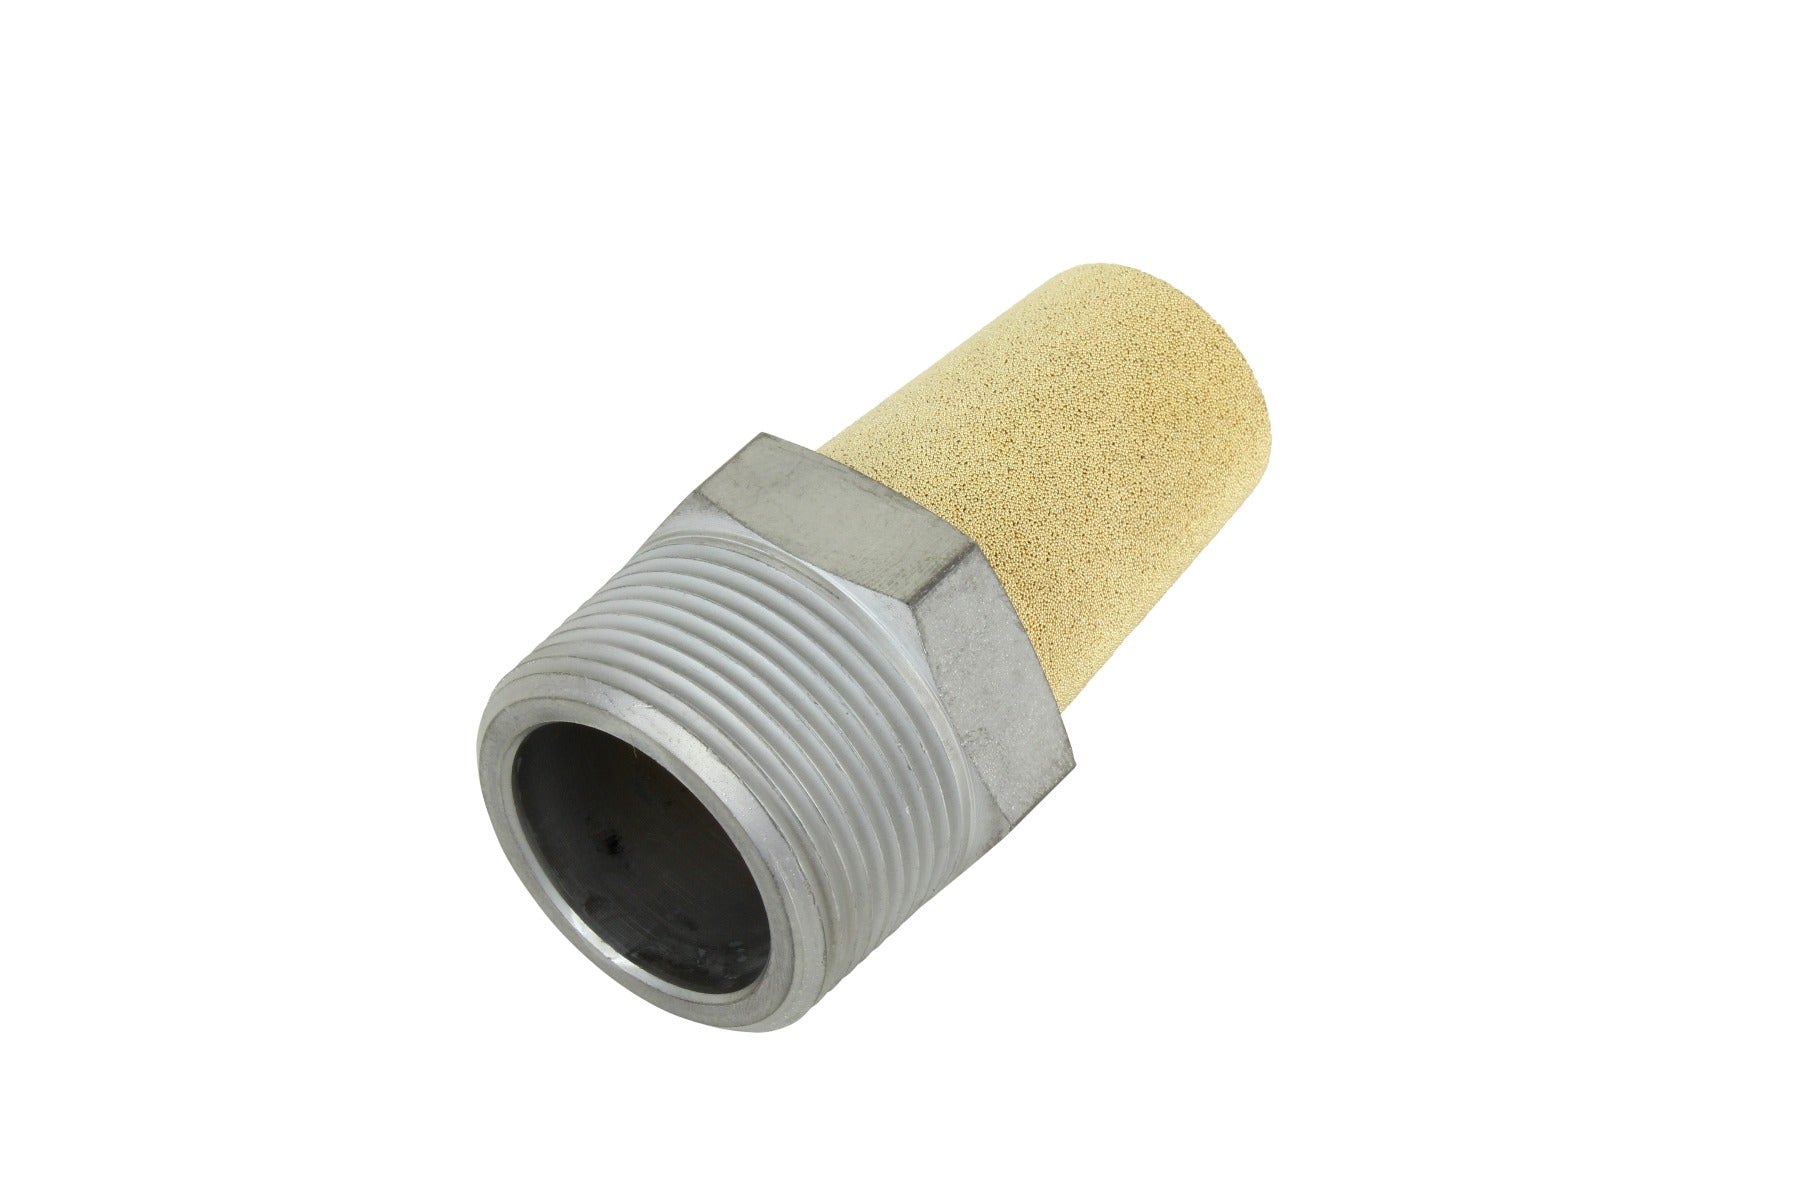 Pneumatic Exhaust Muffler, 1 1/4” MNPT 40 Micron Sintered Bronze Silencer/Diffuse air & Noise Reducer